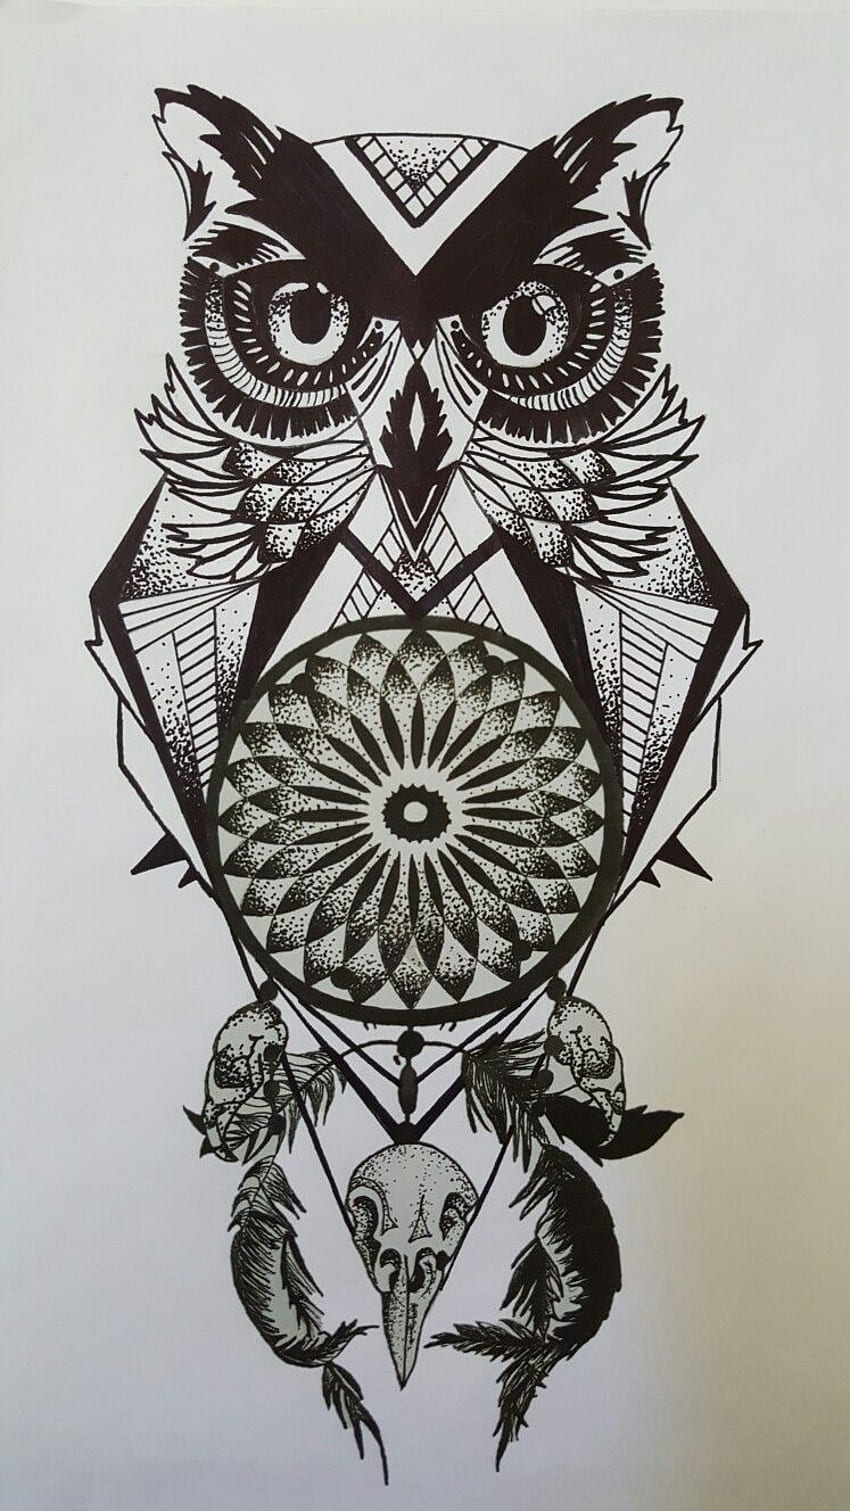 File:Dominic Carter Owl Tattoo.jpg - Wikipedia